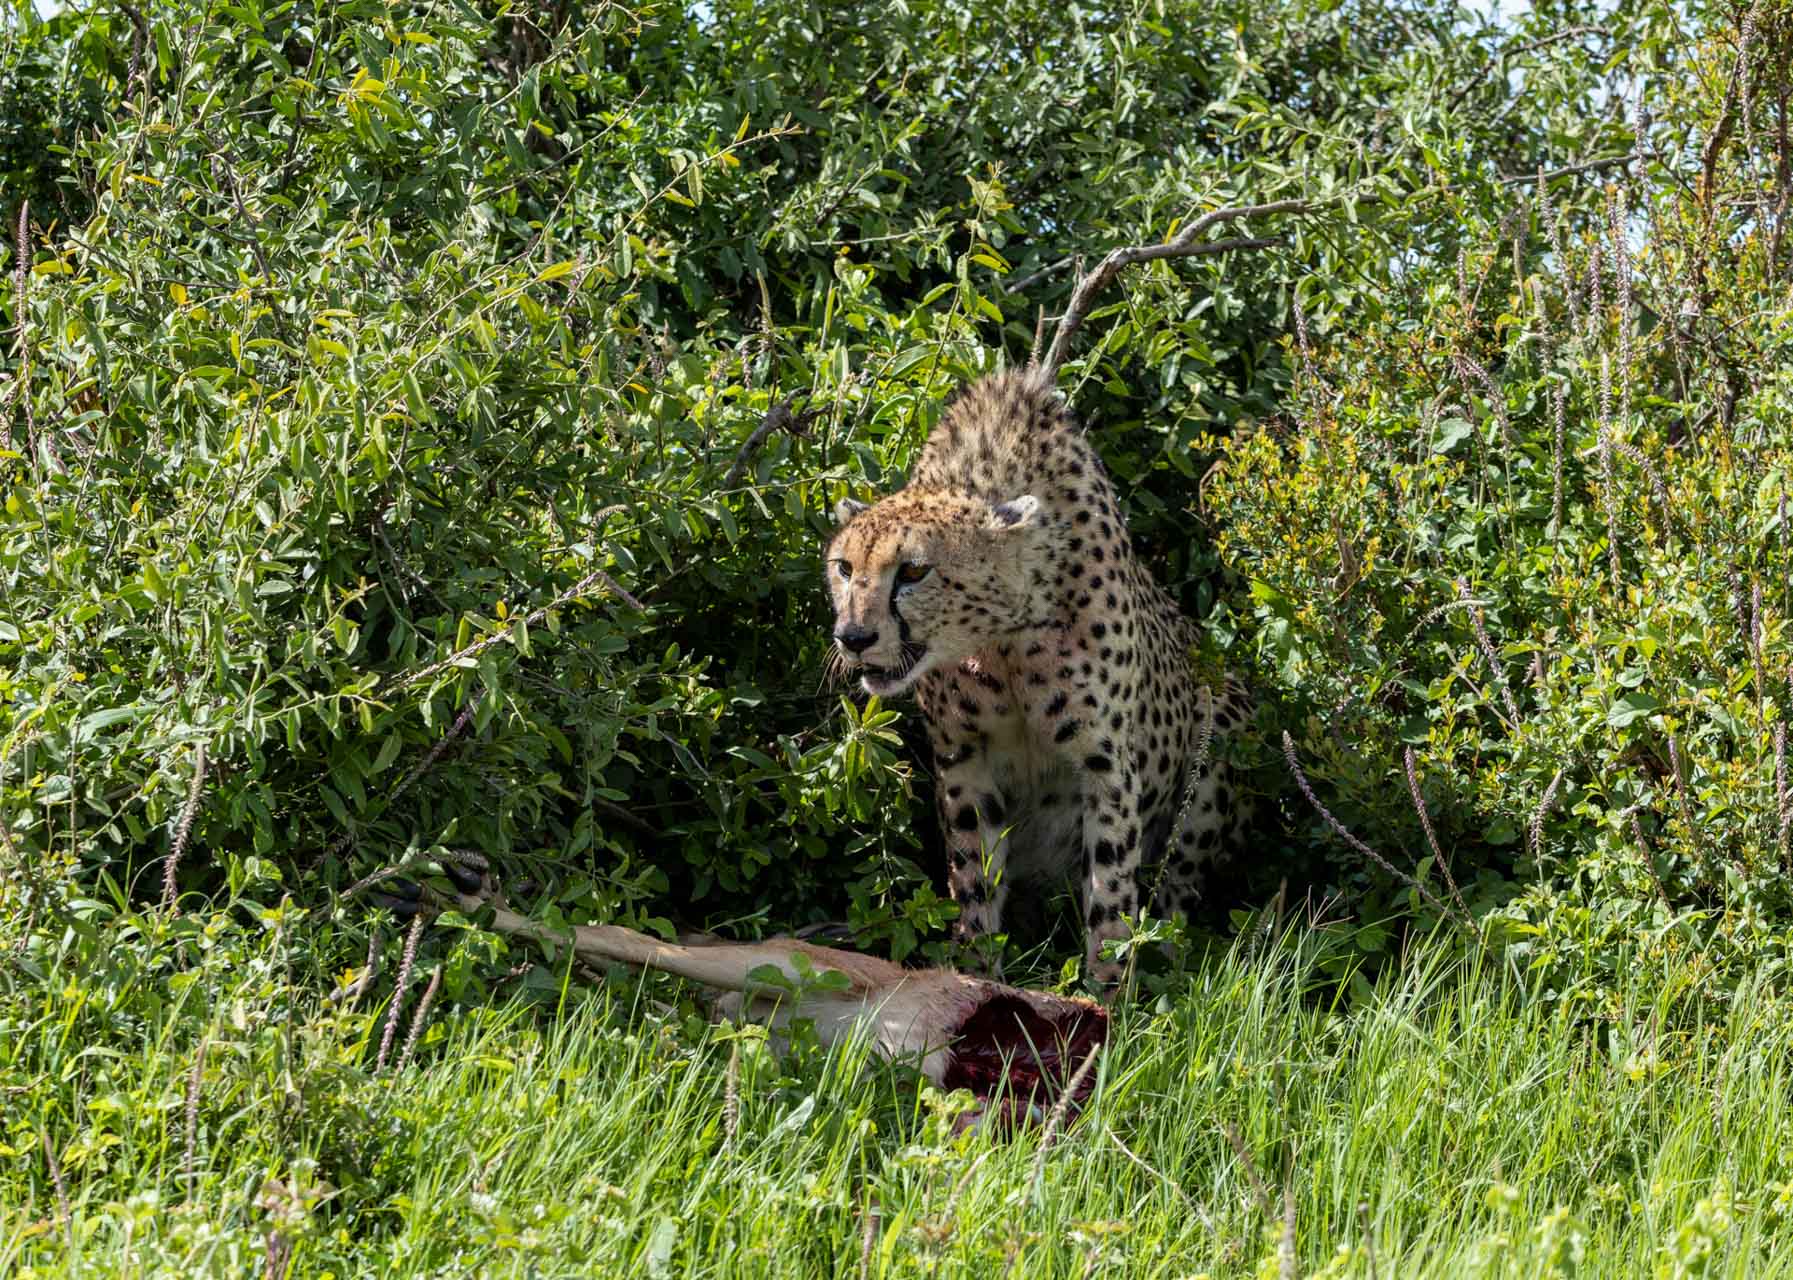 What luck — a cheetah with an impala kill